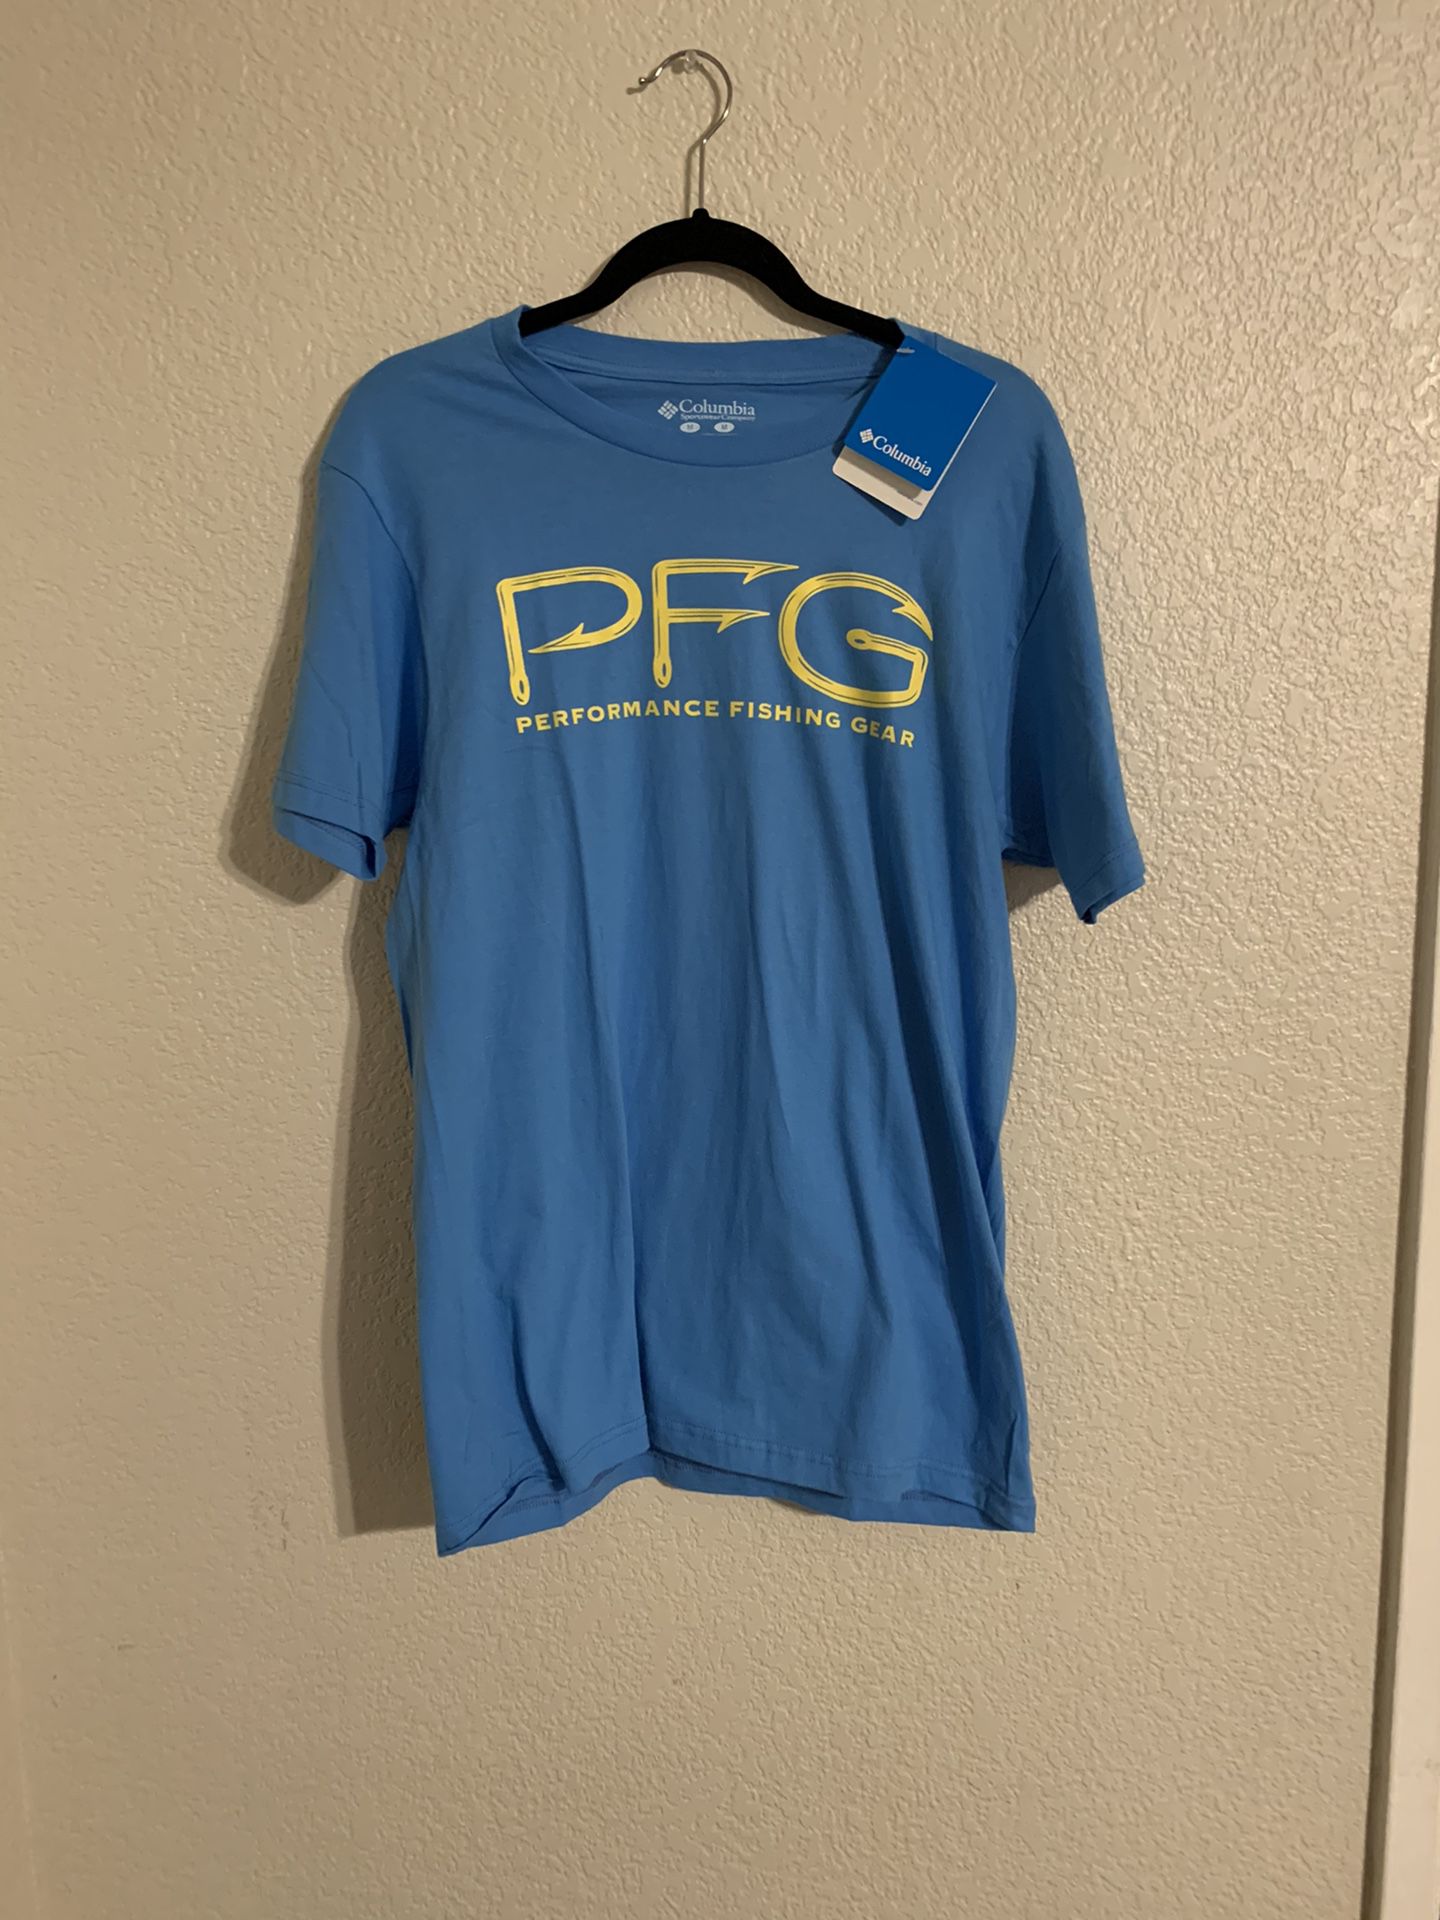 Columbia PFG (Performance Fishing Gear) Shirt